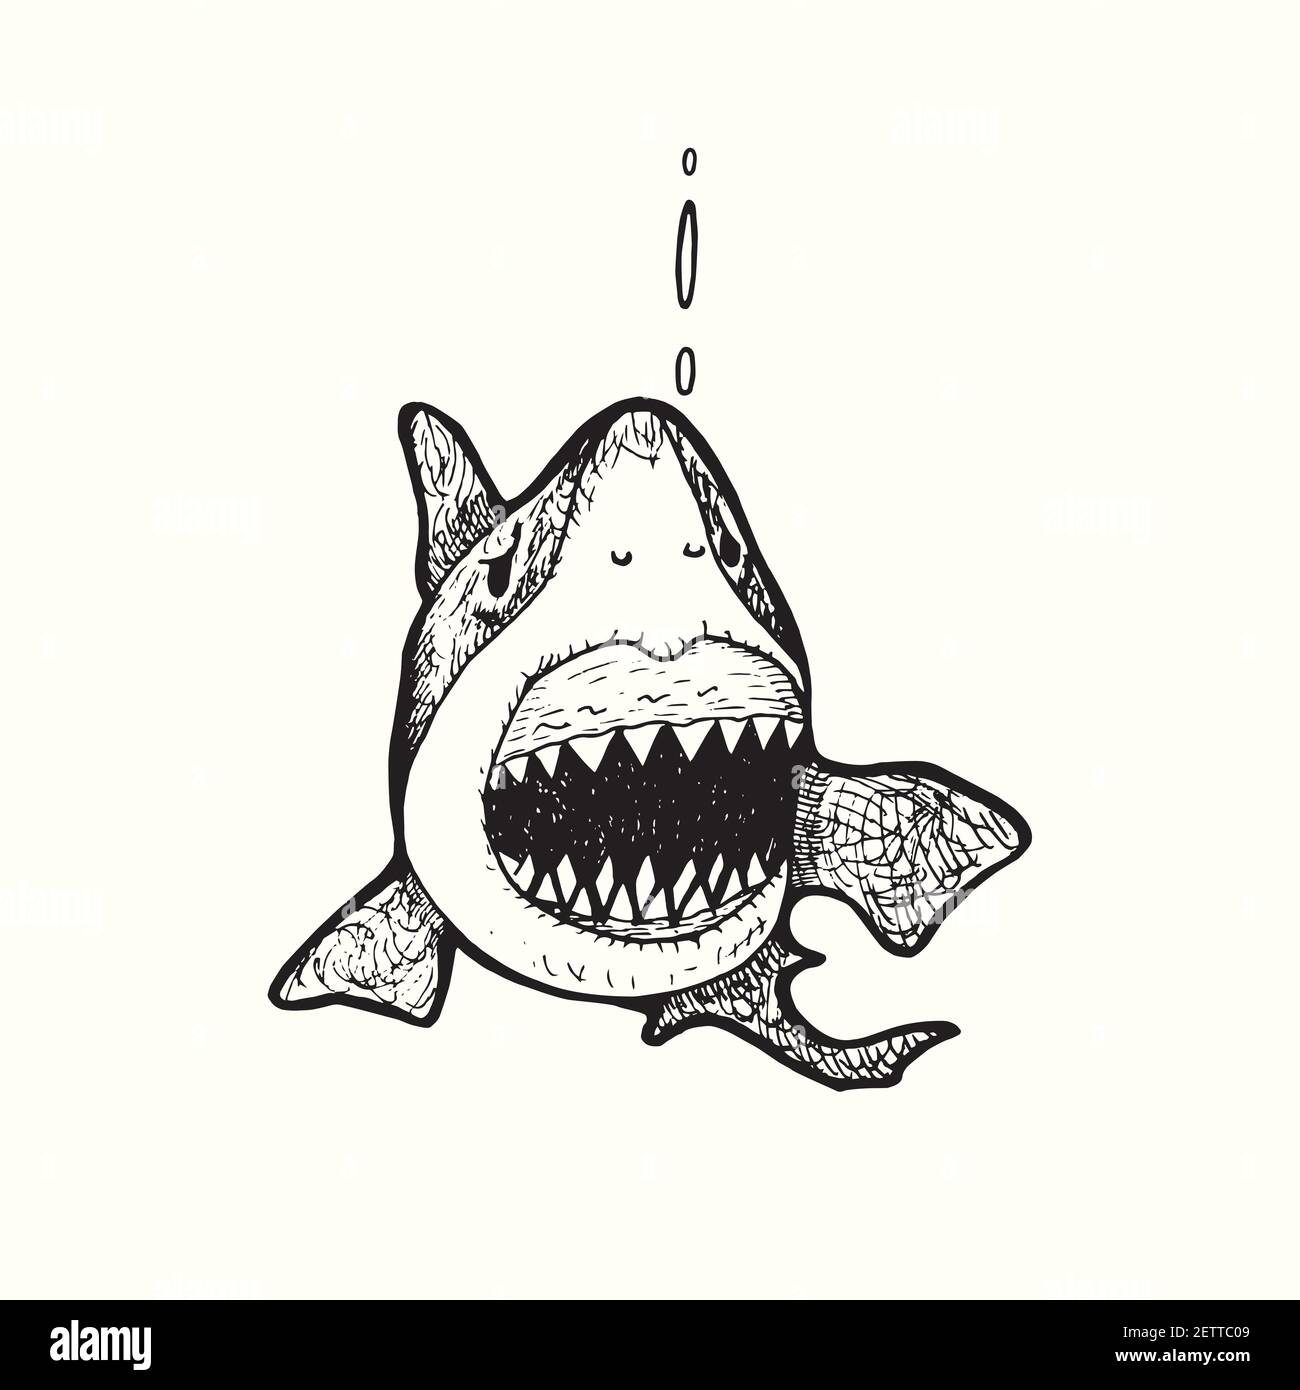 1600 Great White Shark Illustrations RoyaltyFree Vector Graphics  Clip  Art  iStock